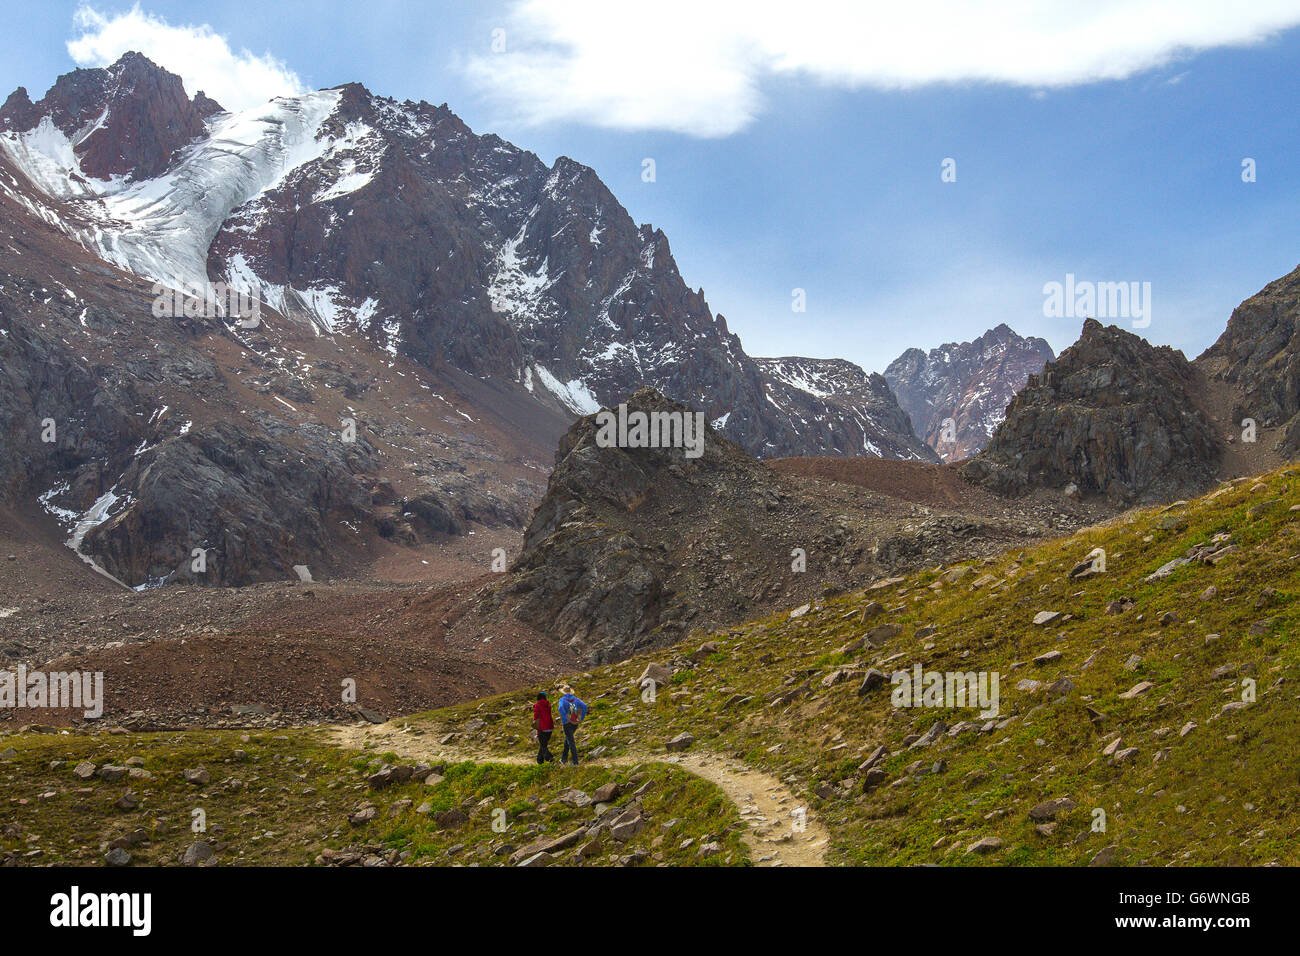 Couple hiking in the Ala Tau Mountains in Almaty, Kazakhstan. Stock Photo